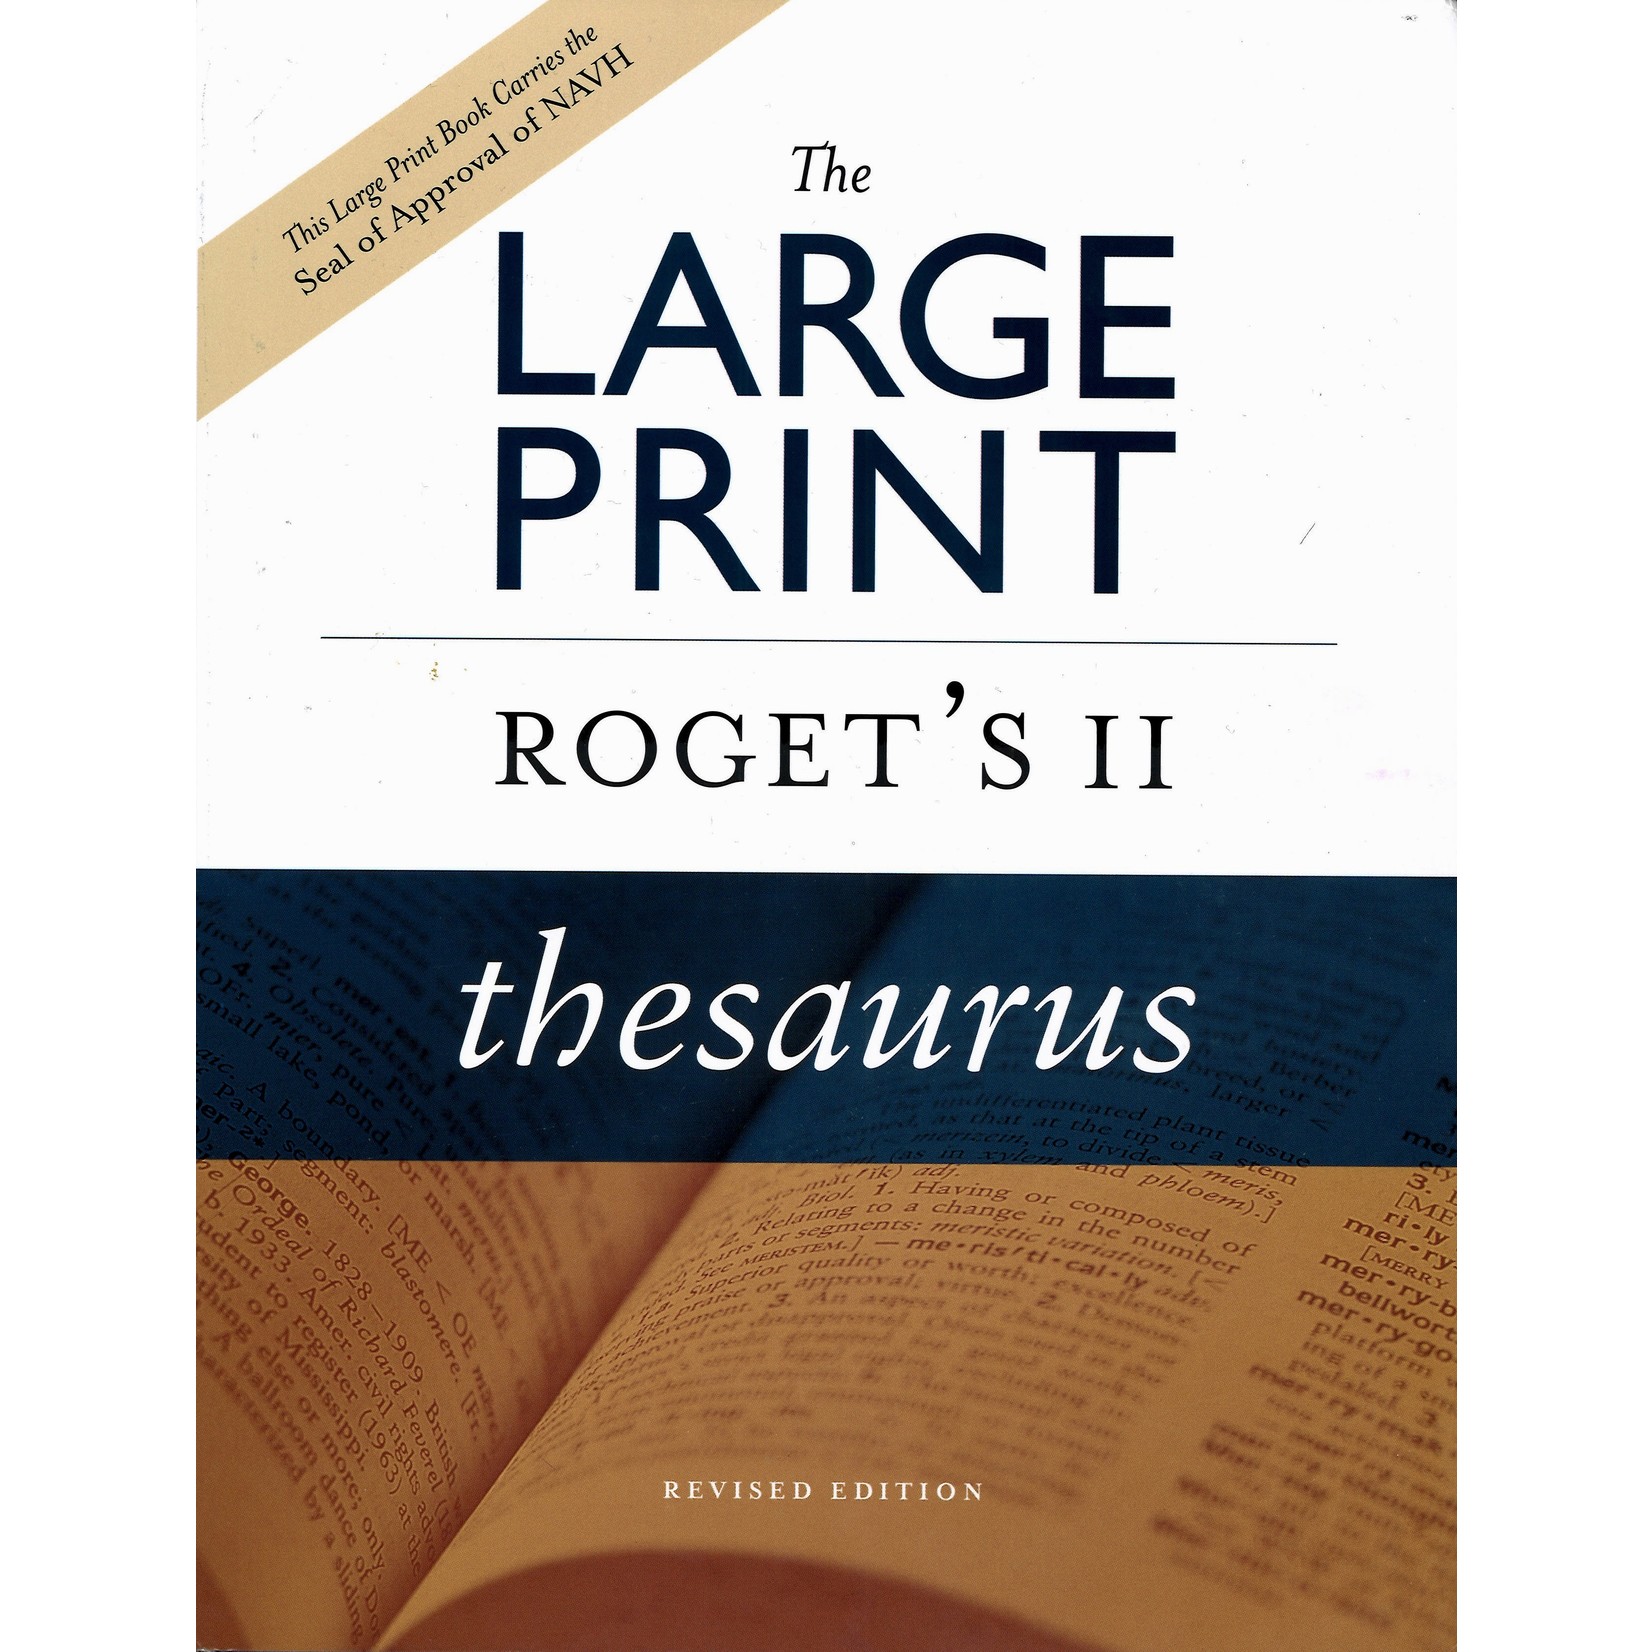 THE LARGE PRINT ROGET'S II THESAURU